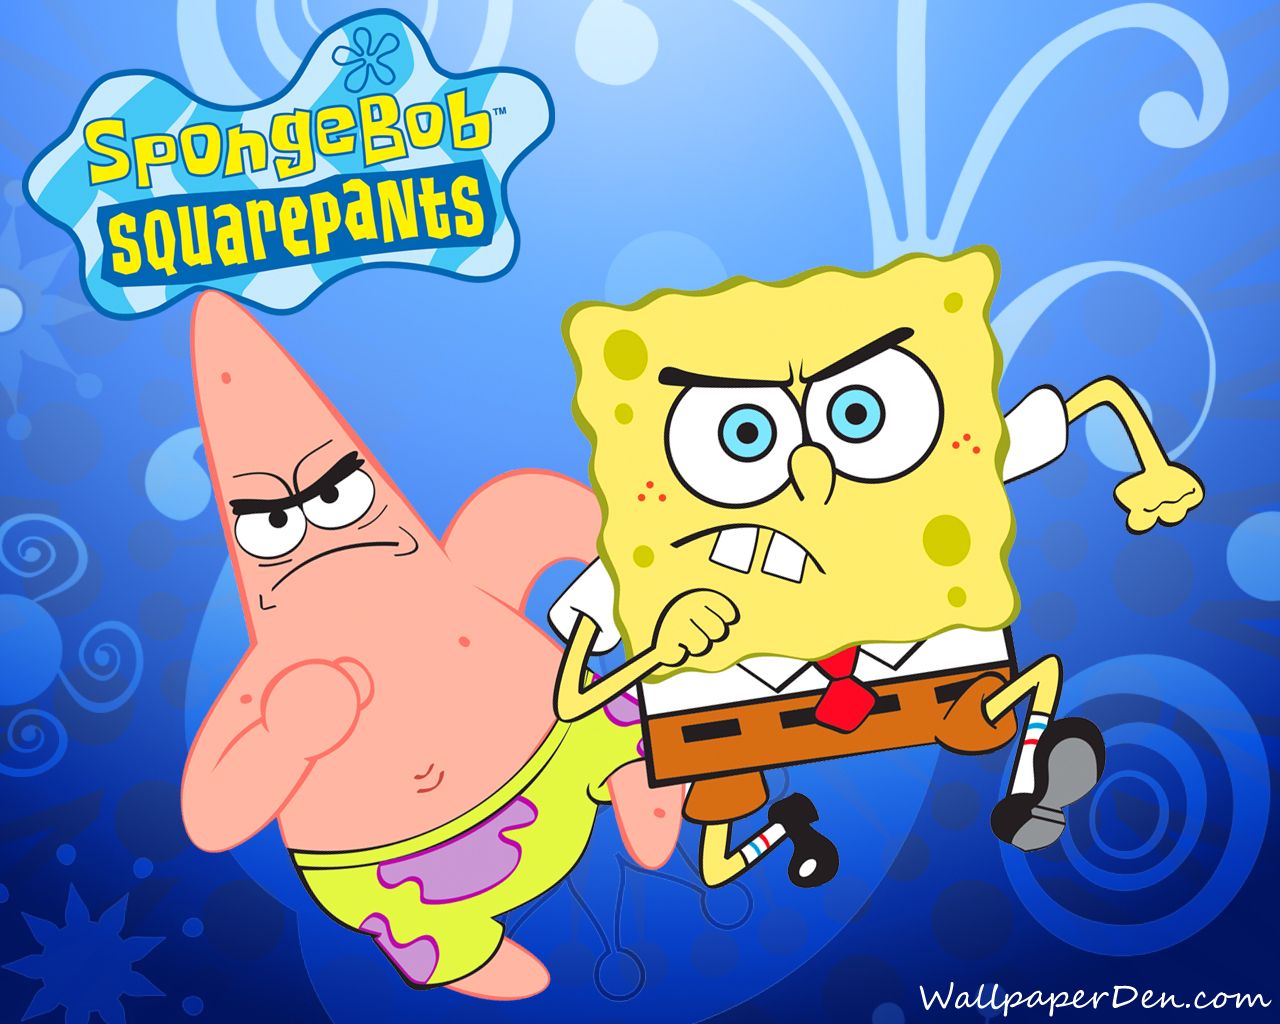 KidsCoolCartoons: Spongebob Squarepants